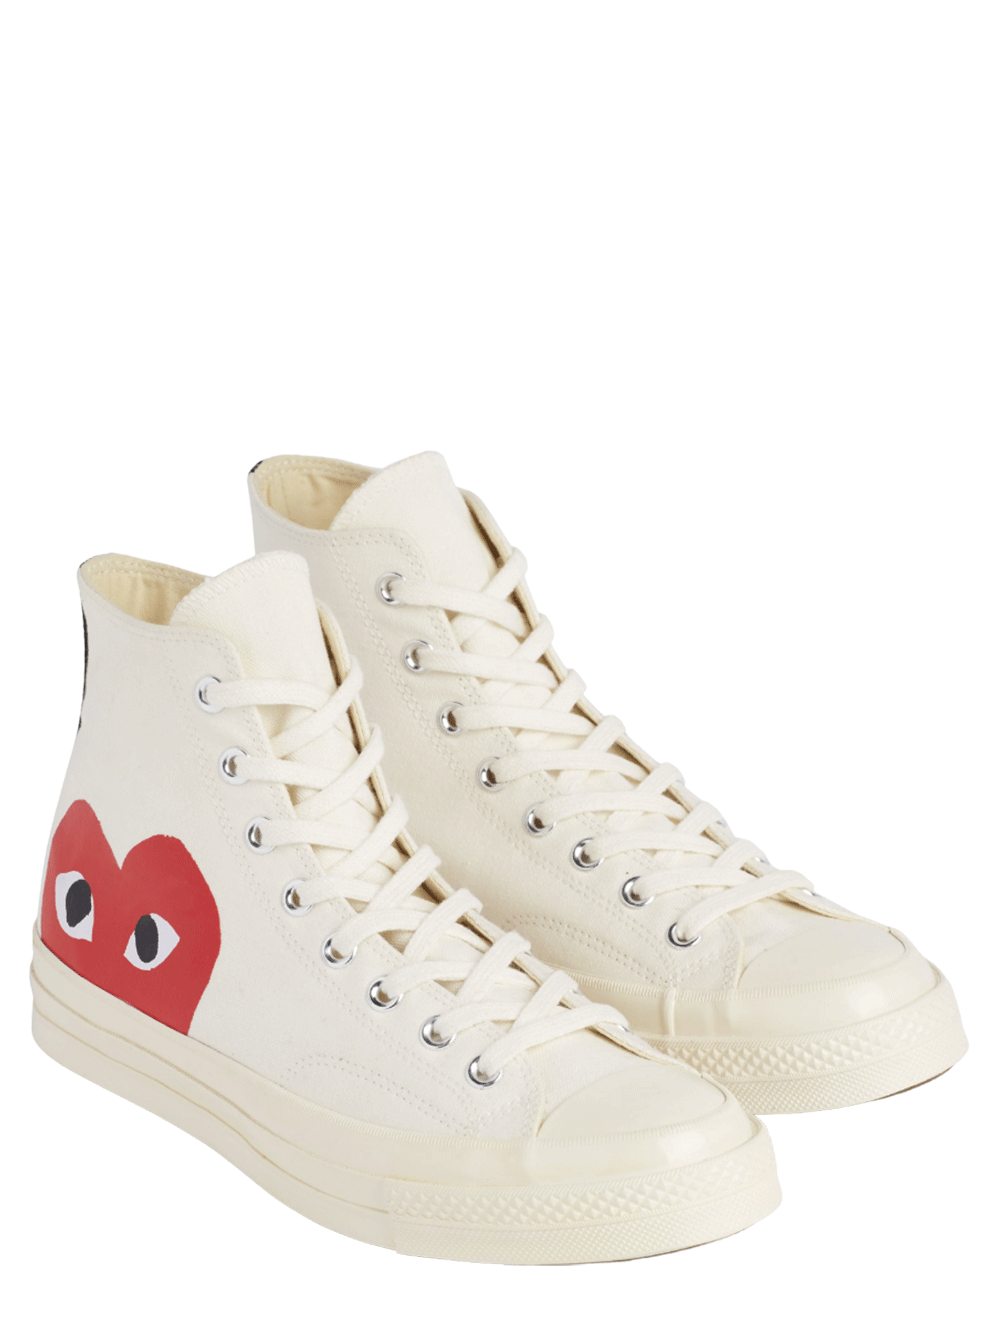 COMME-des-GARCONS-PLAY-CONVERSE-Converse-Peek-A-Boo-Heart-High-Cut-Sneakers-White-2